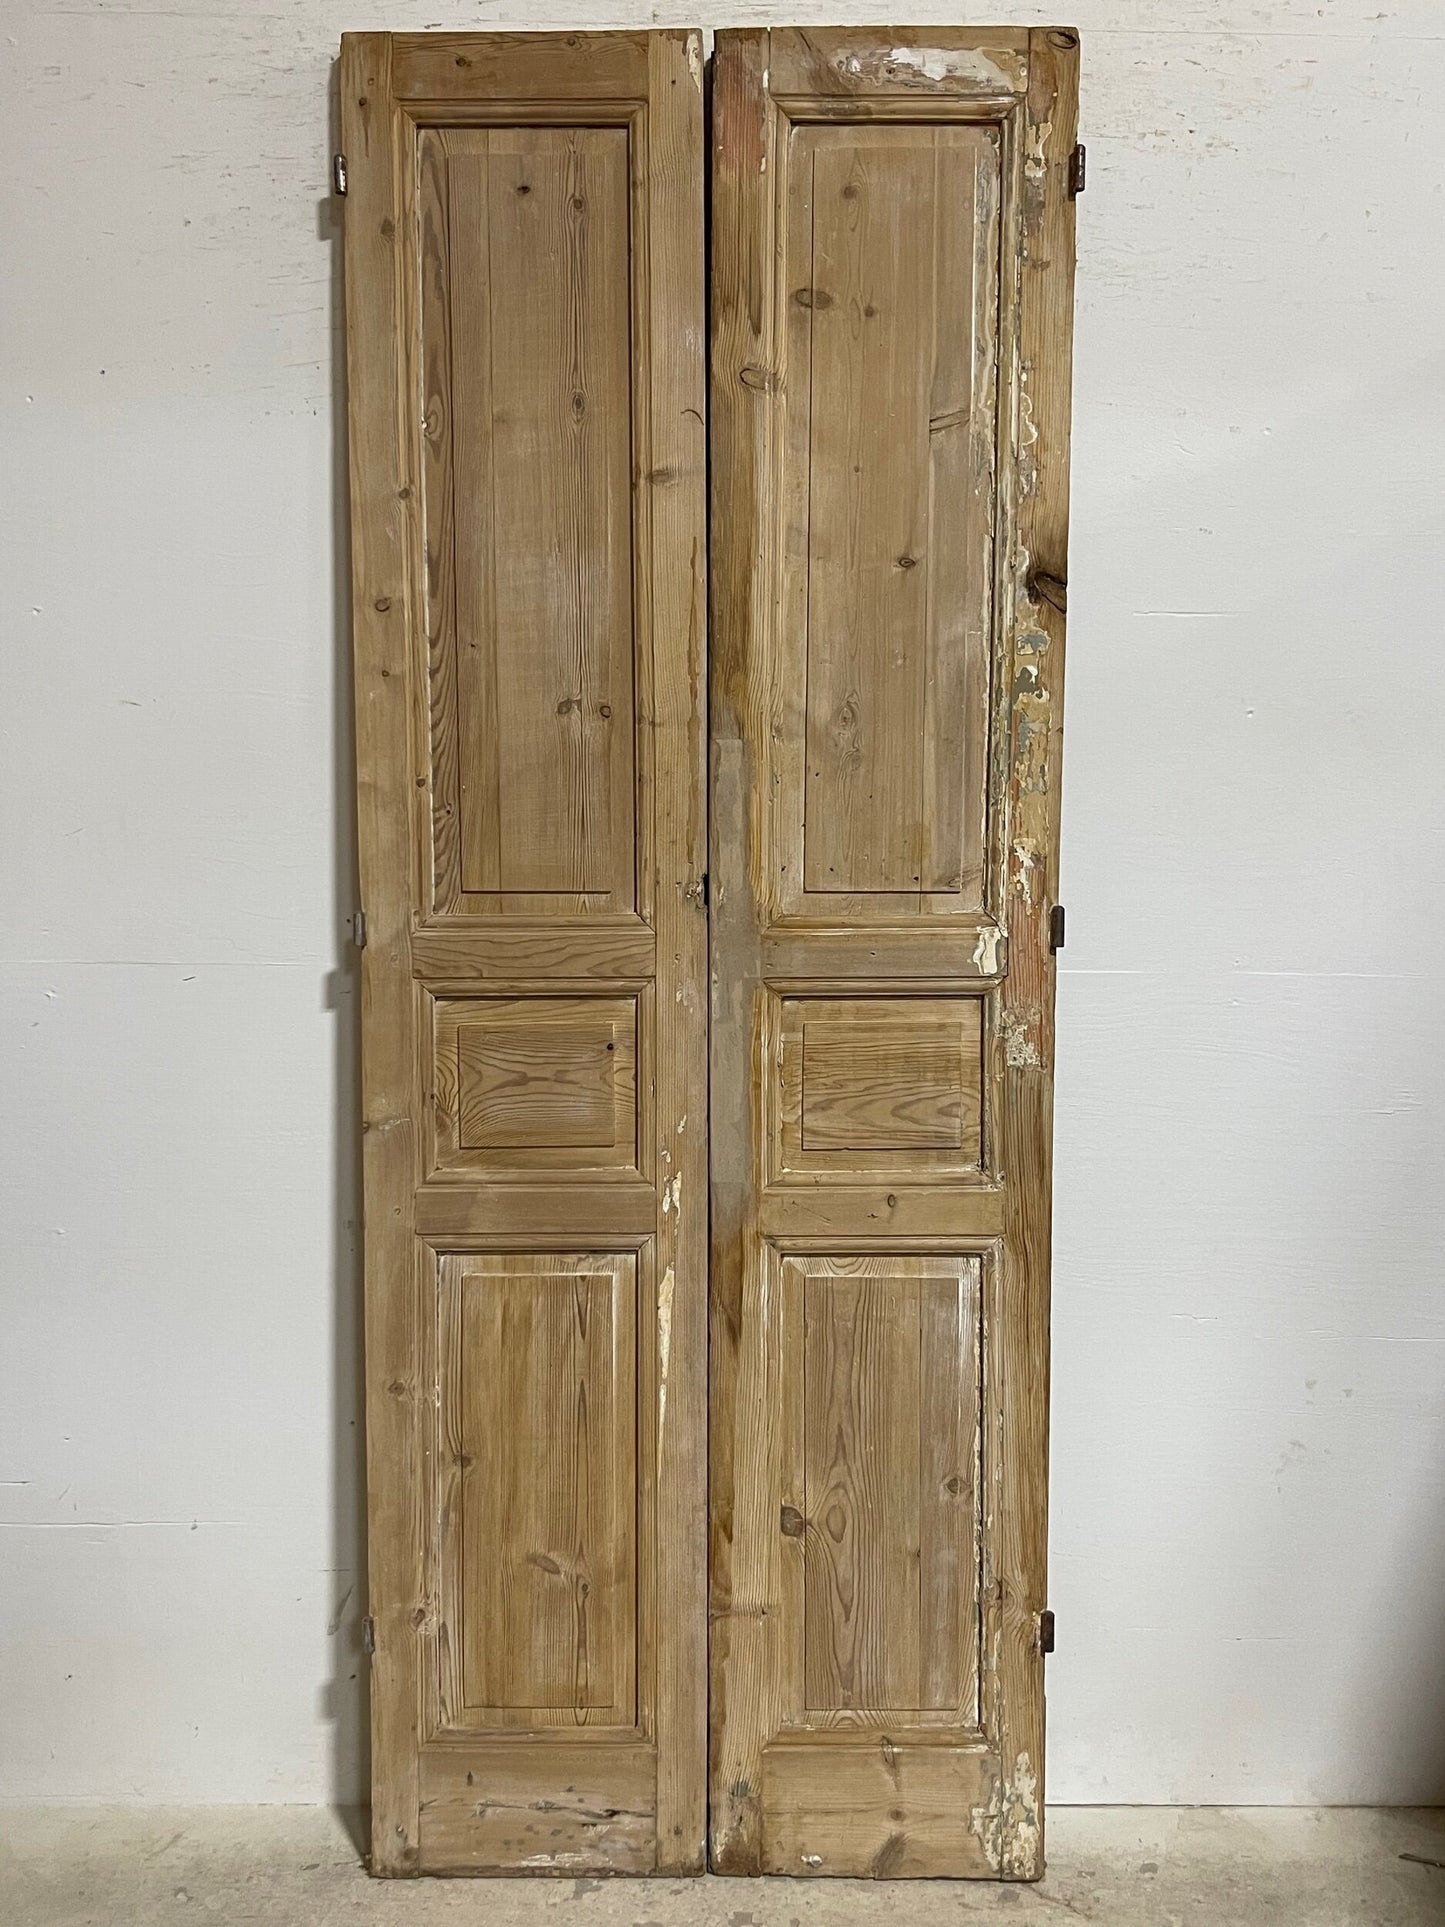 Antique French panel doors (95x35.75) I167